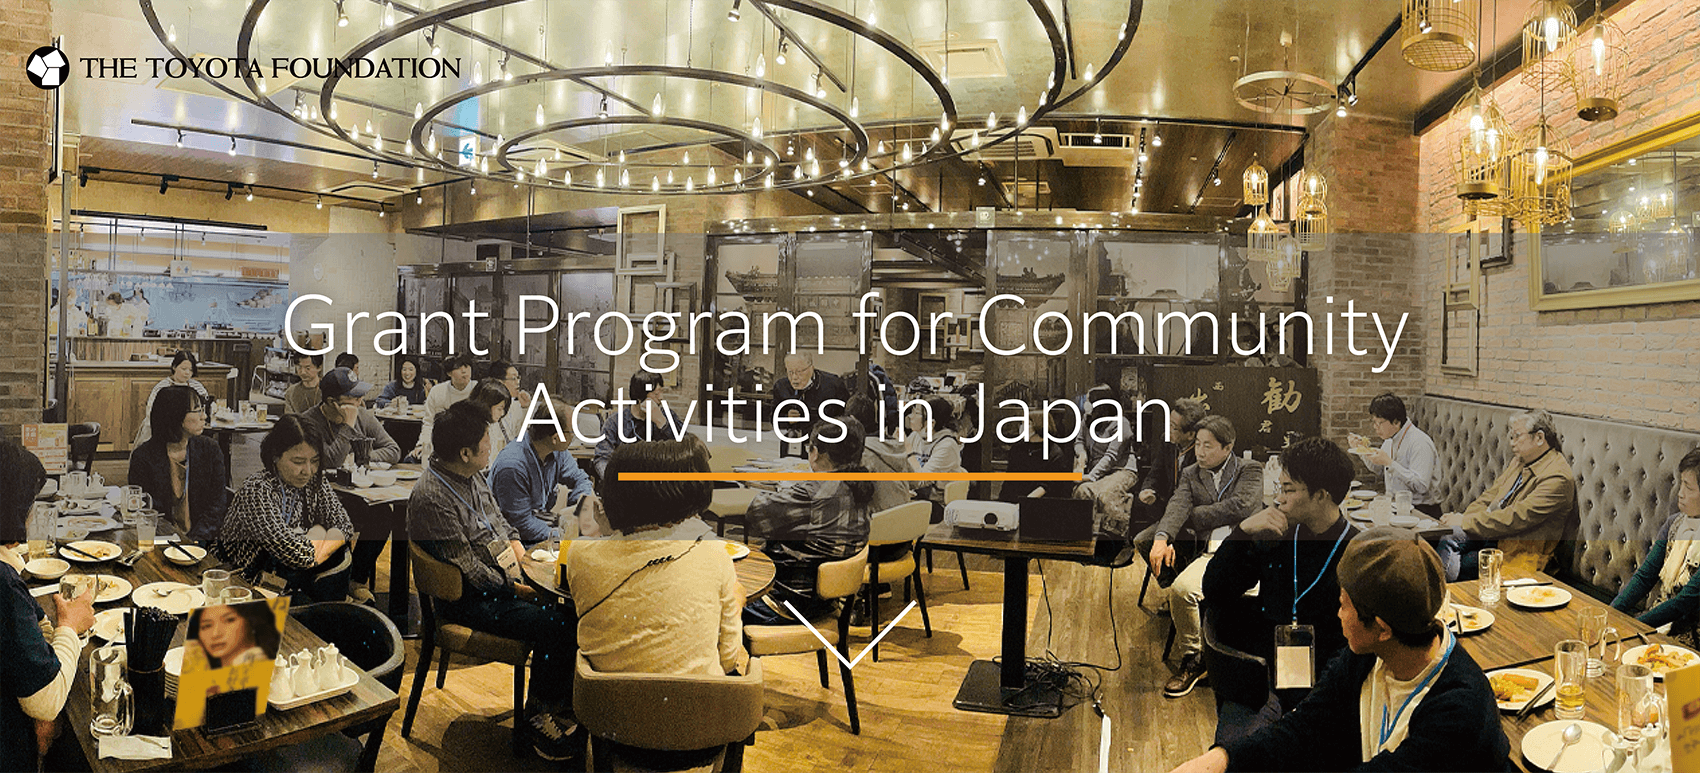 Grant Program for Community Activities in Japan